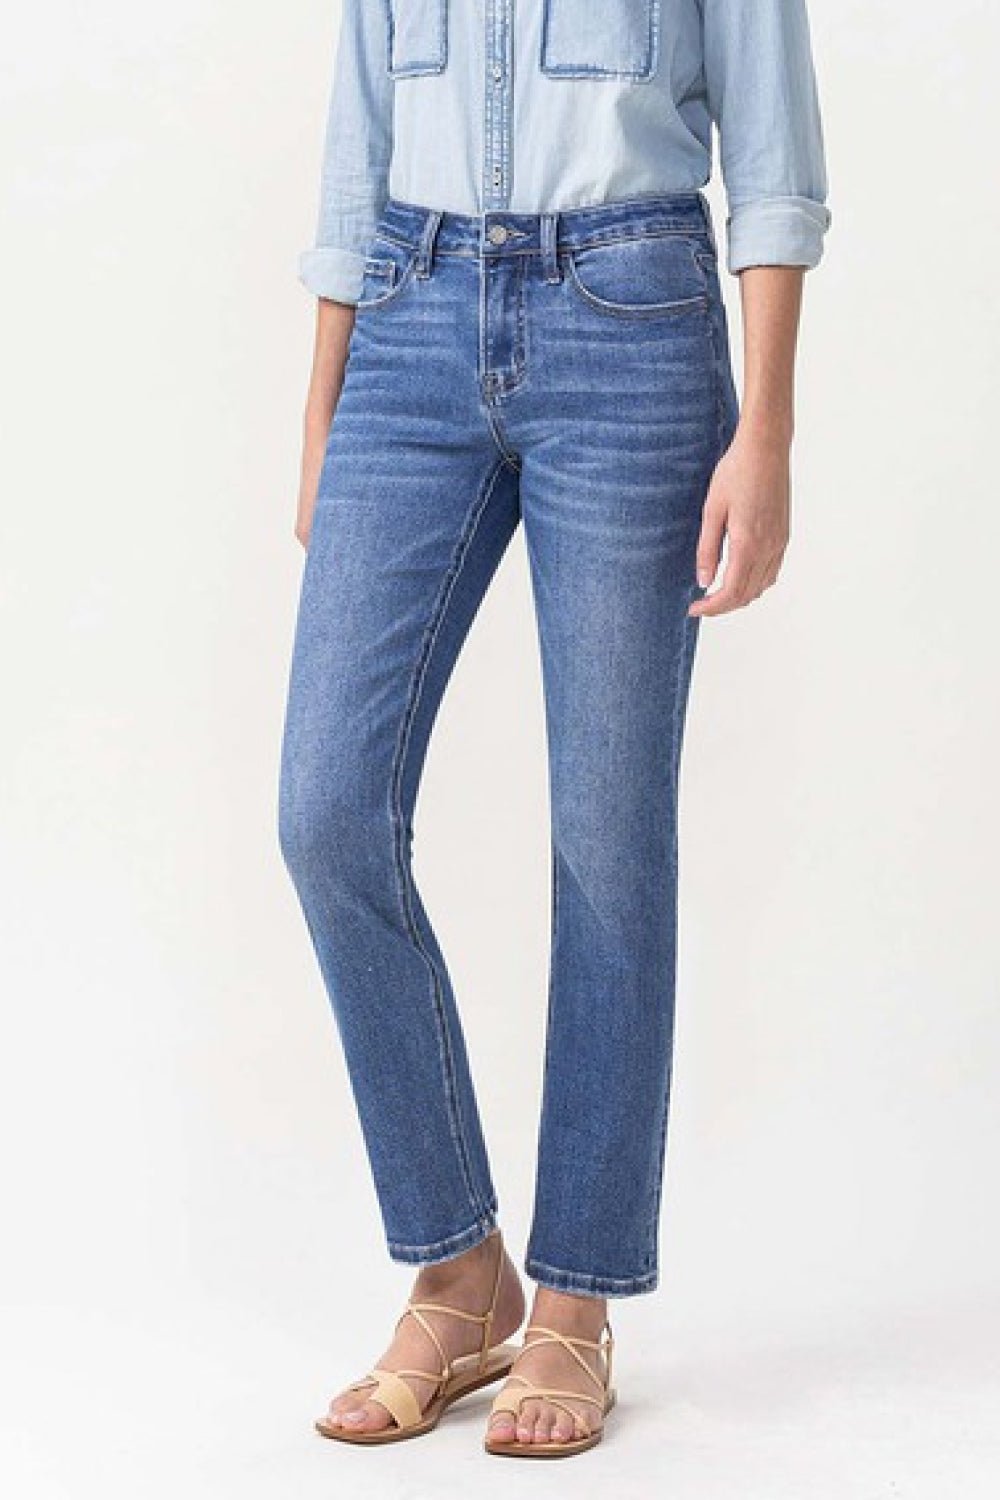 Midrise Slim Ankle Length Straight Leg Medium Wash JeansJeansLovervet